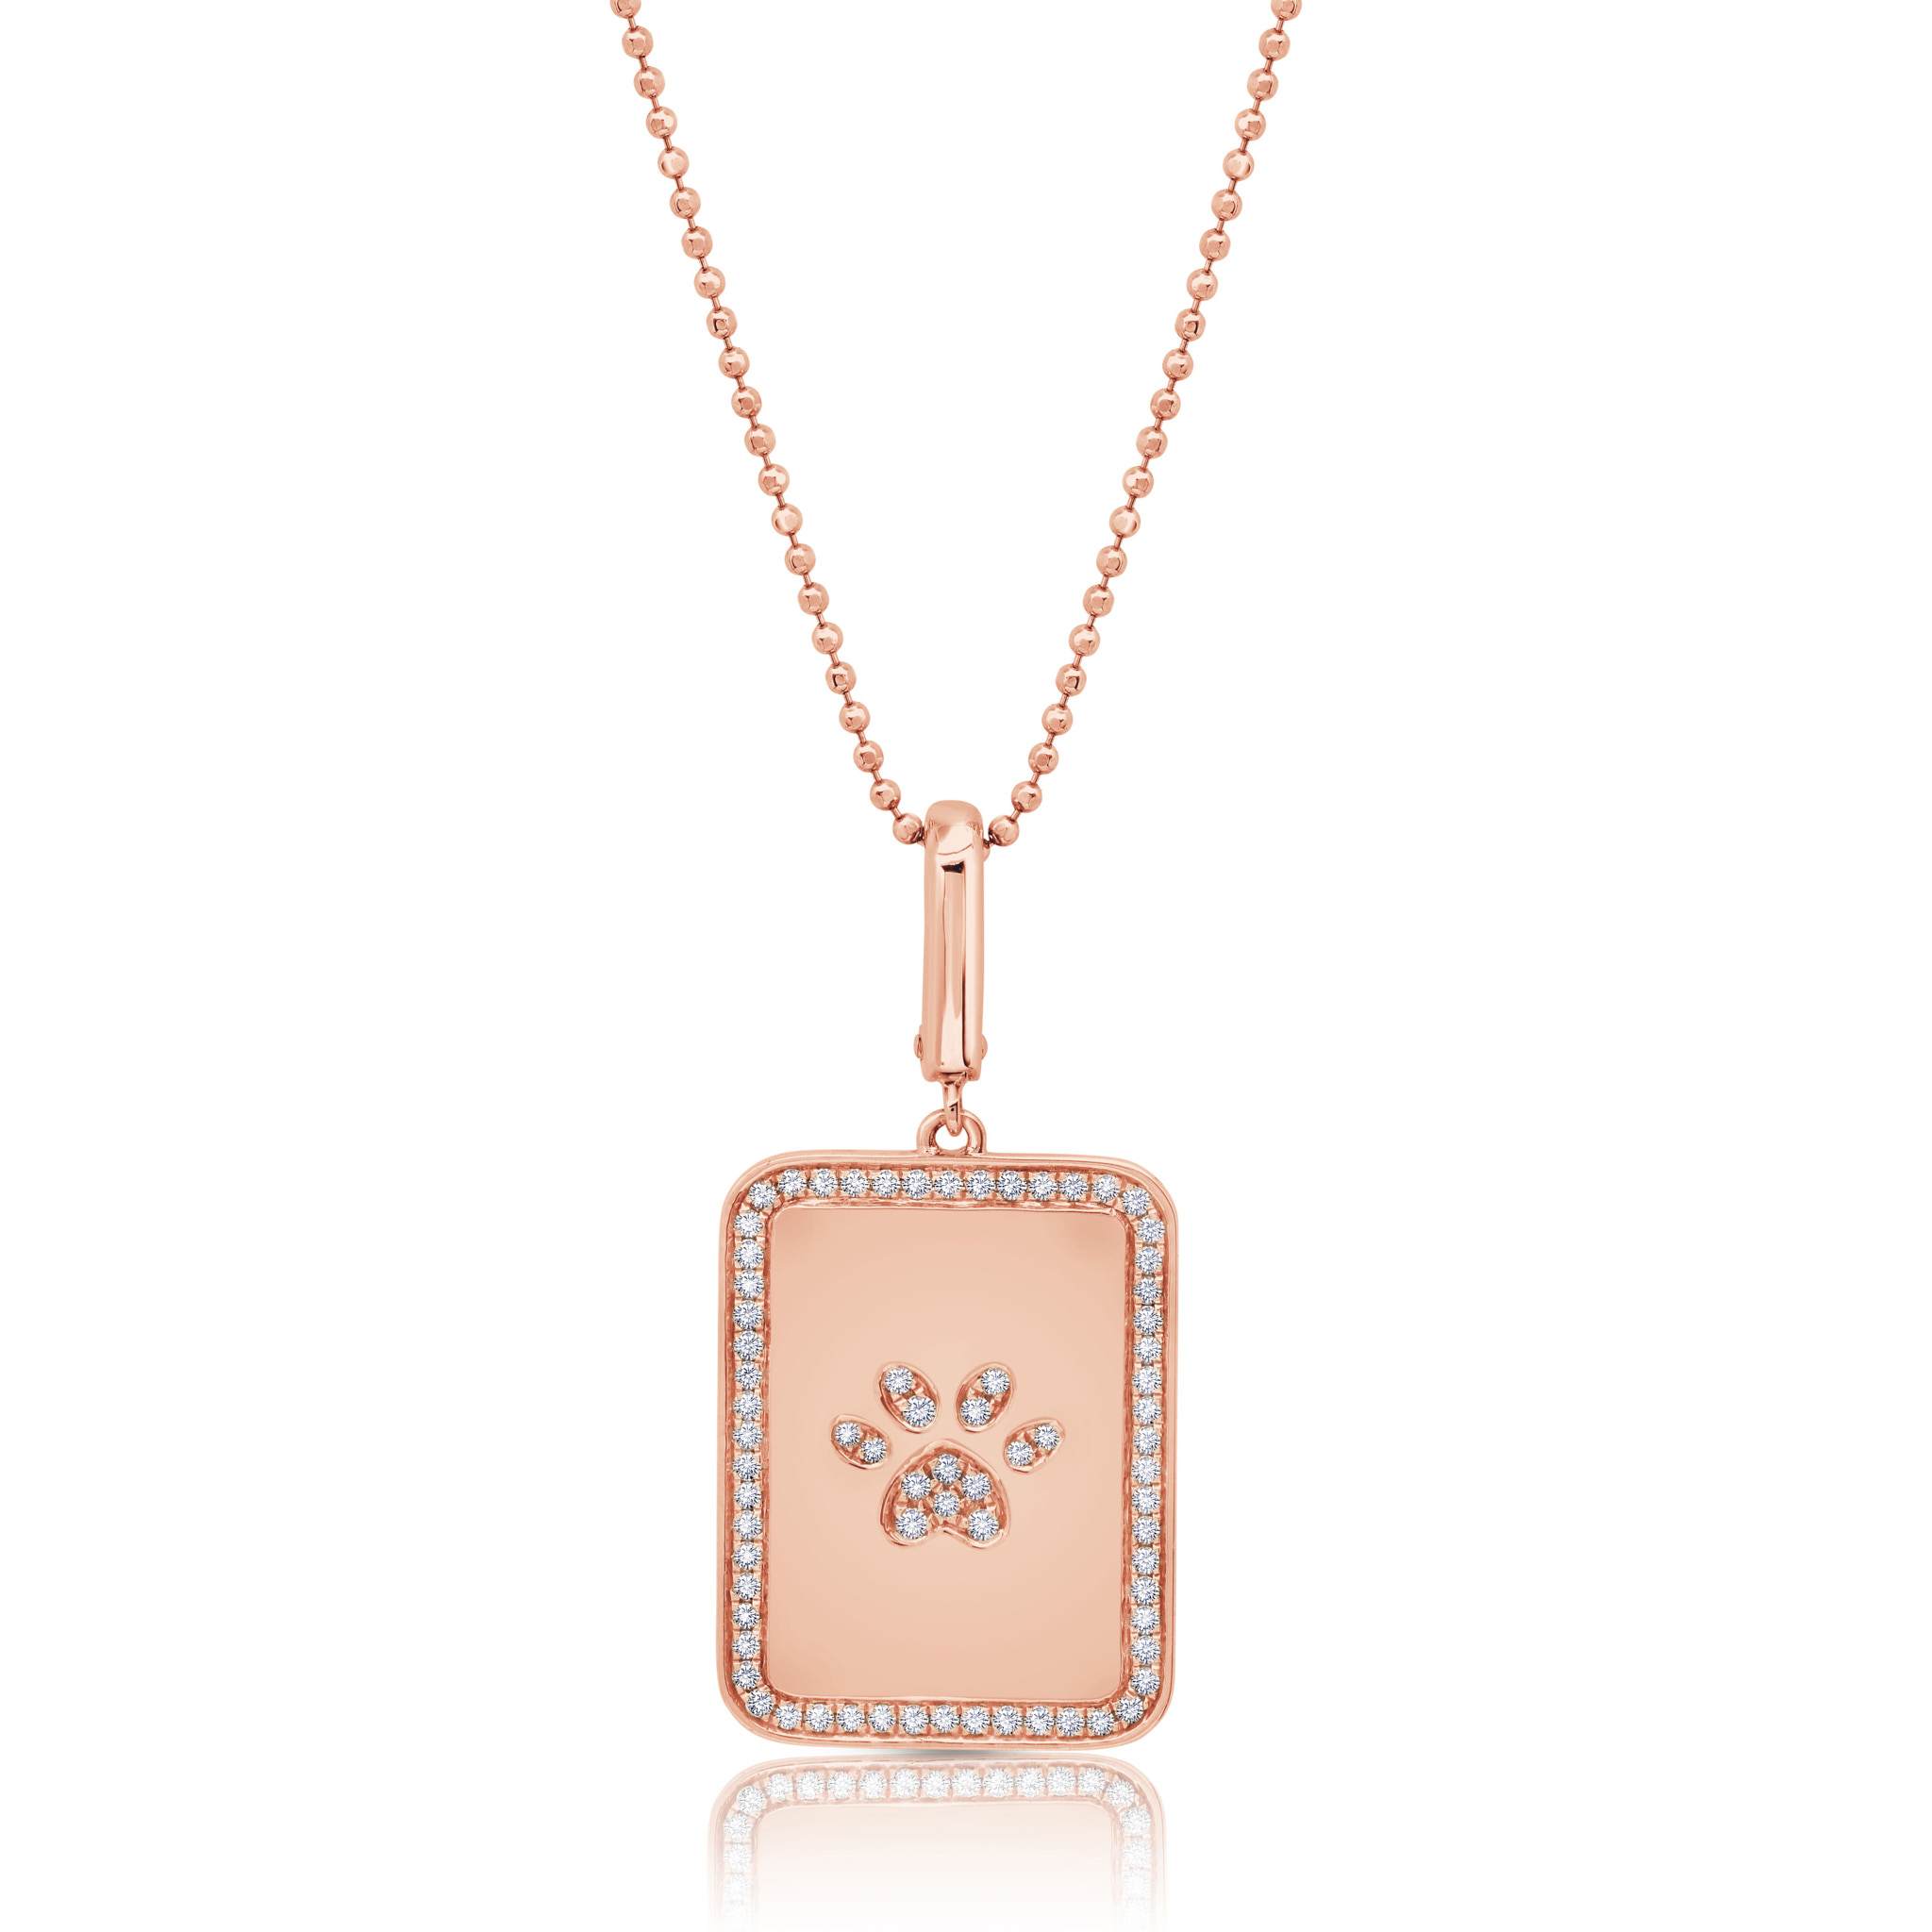 Graziela Gems - Necklace - Dog Paw Rectangle Pendant - Rose Gold 14K Diamond